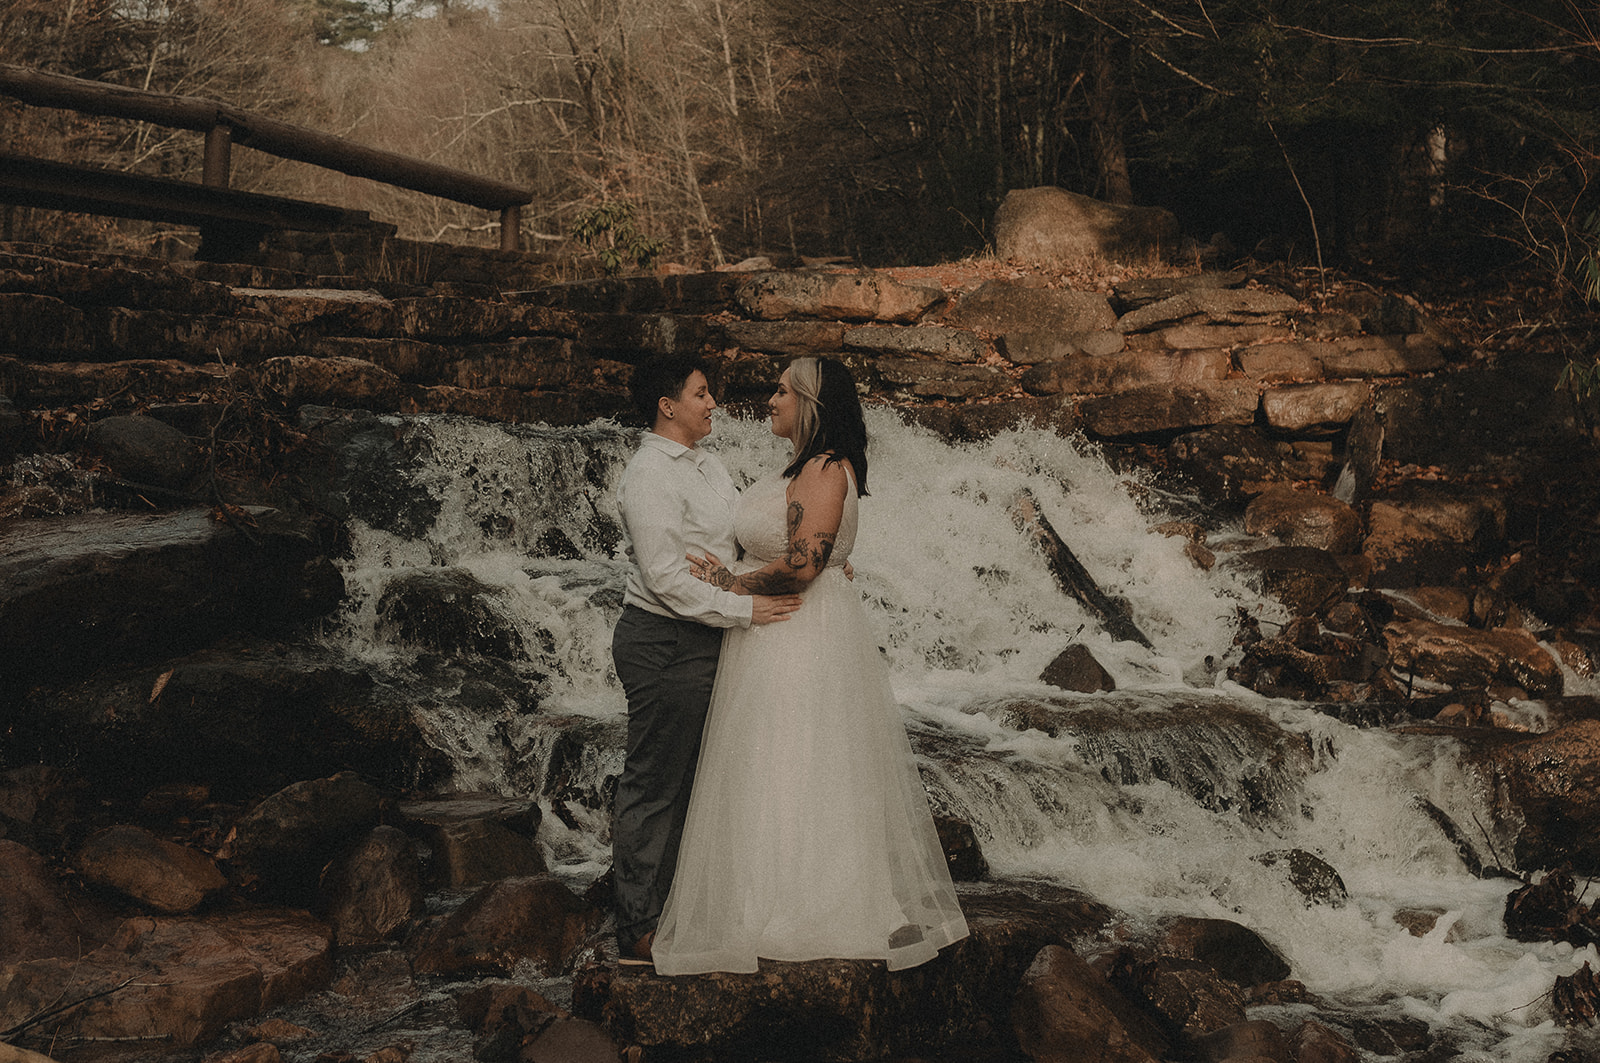 Chasing Waterfall Wonders: Peyton and Memory's Hidden Love Gem in the Poconos